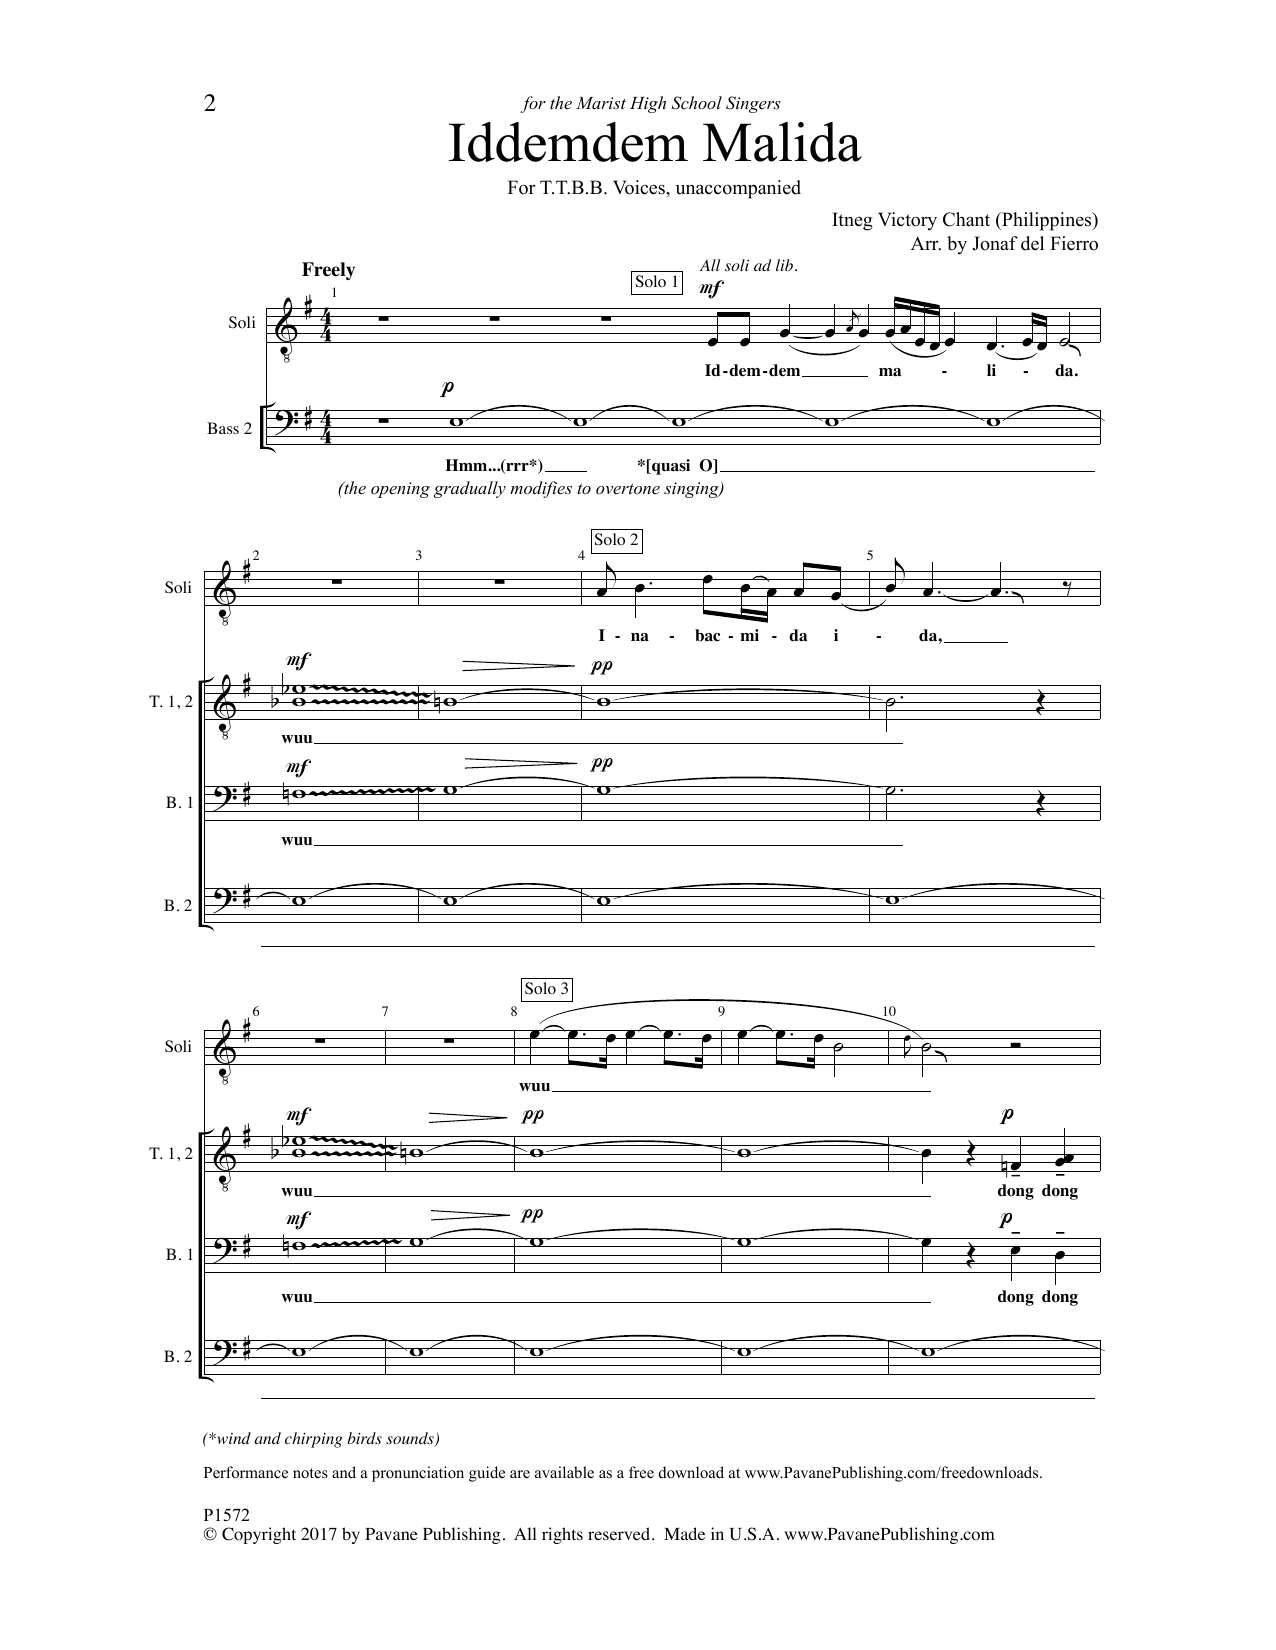 Download Jonaf del Fierro Iddemdem Malida Sheet Music and learn how to play TTBB Choir PDF digital score in minutes